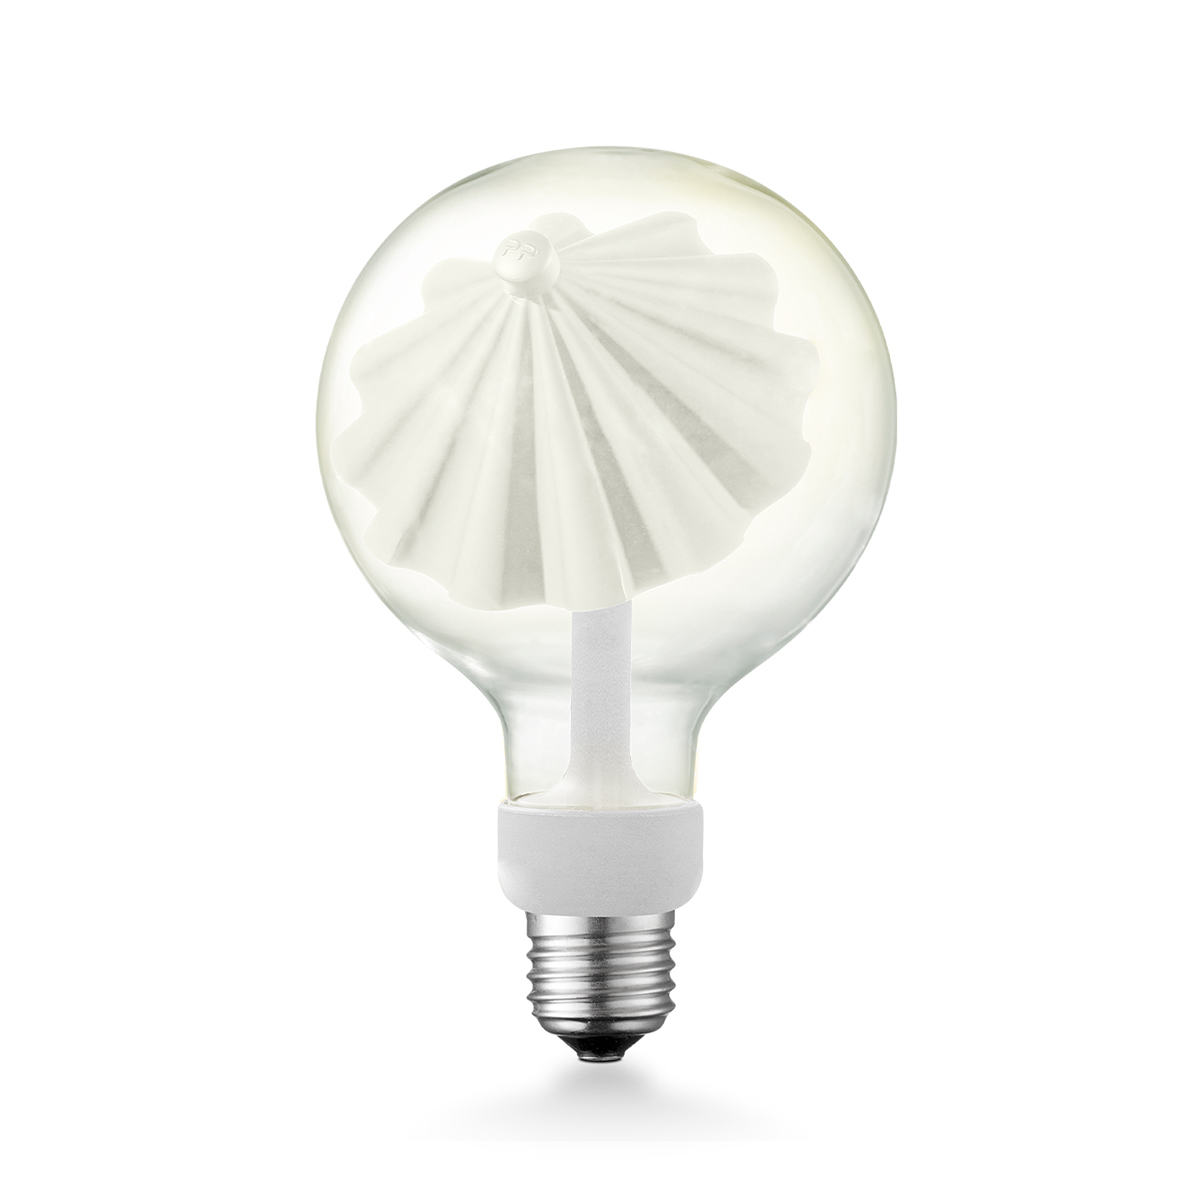 Tangla lighting - 0673-02-D - LED Light Bulb Move me - G120 5.5W Shell white - dimmable - E27 / E26